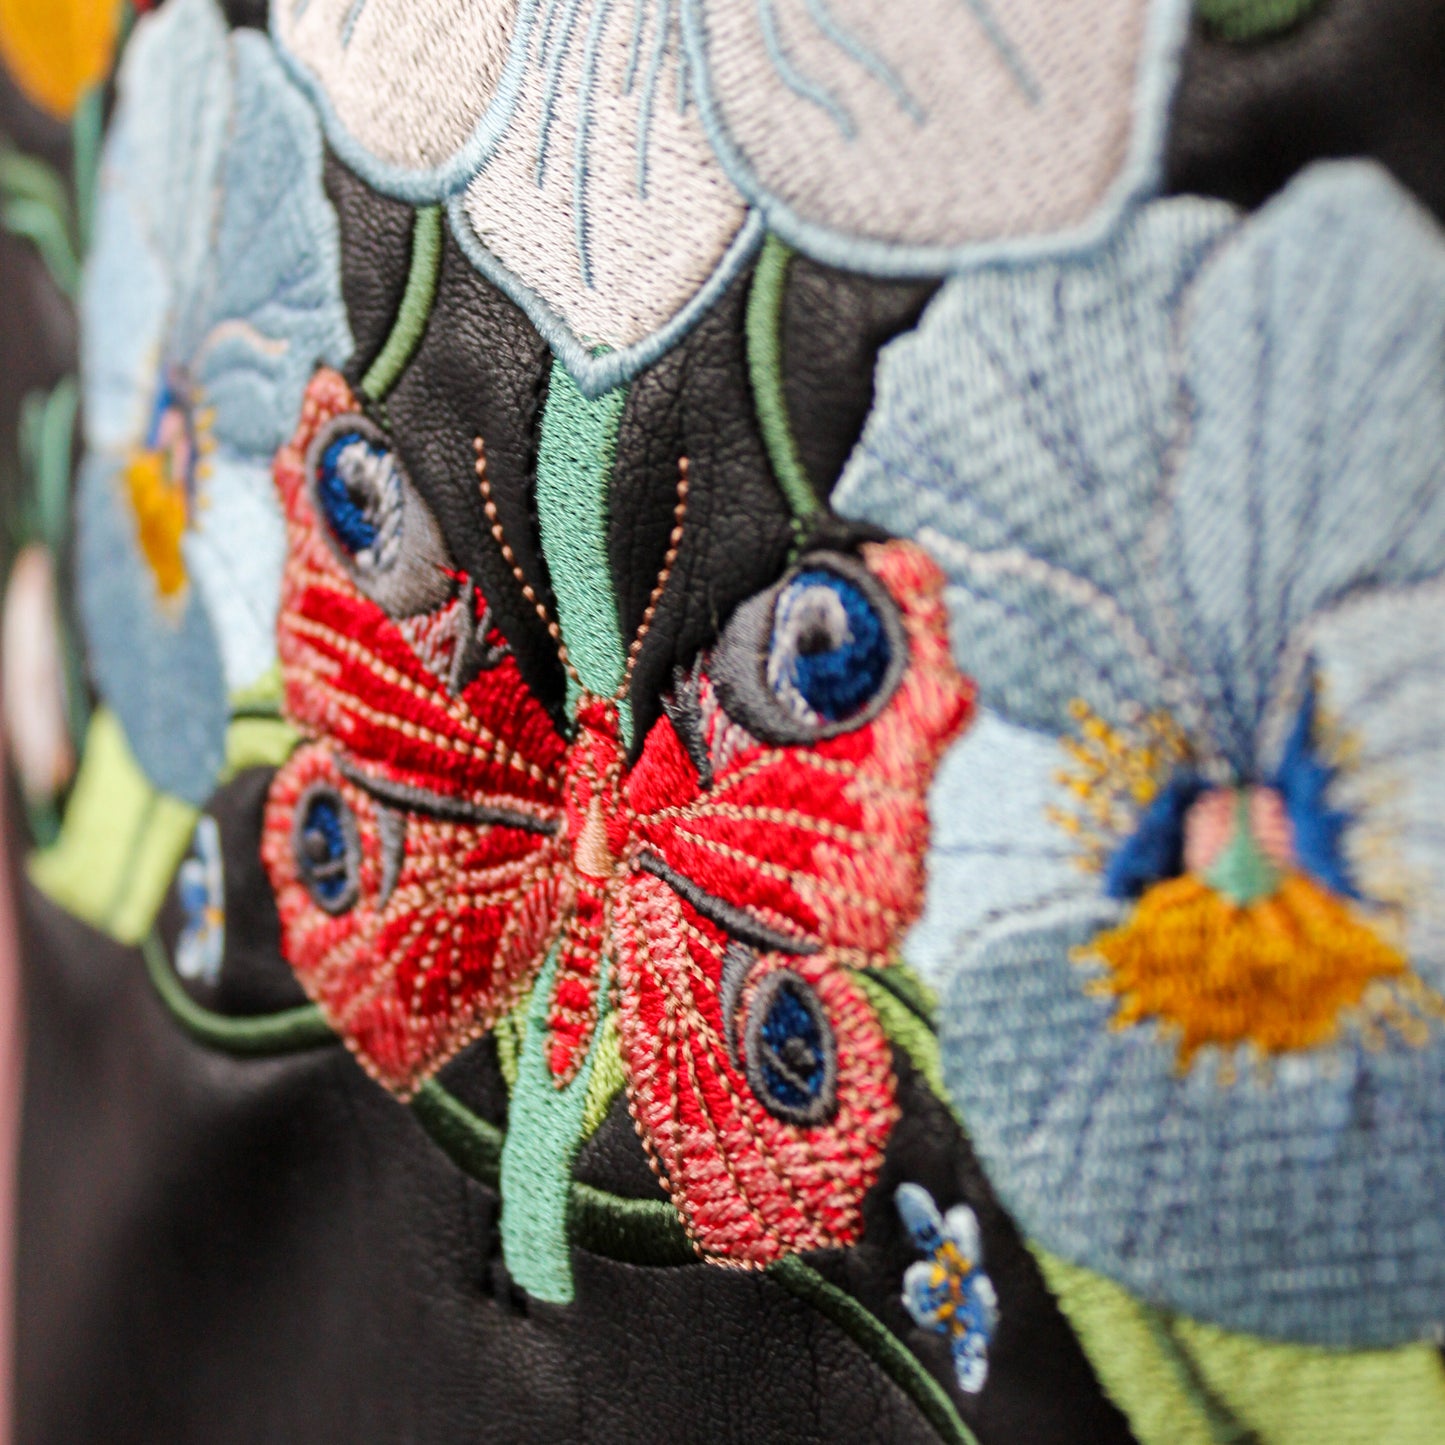 Embroidered wedding jacket, a stylish bridal accessory